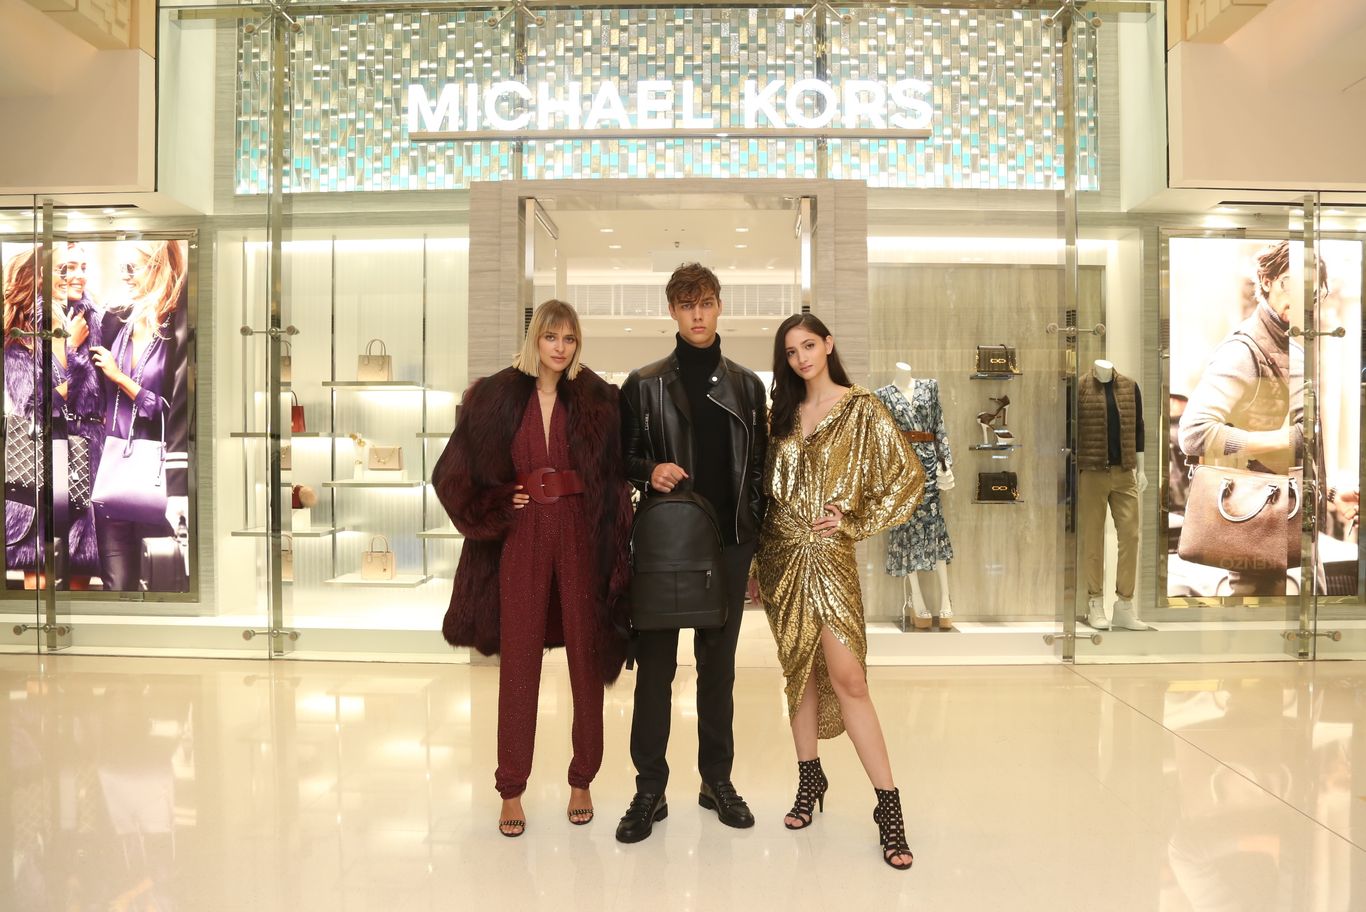 Michael Kors at Elements Mall | Prestige Online - HongKong